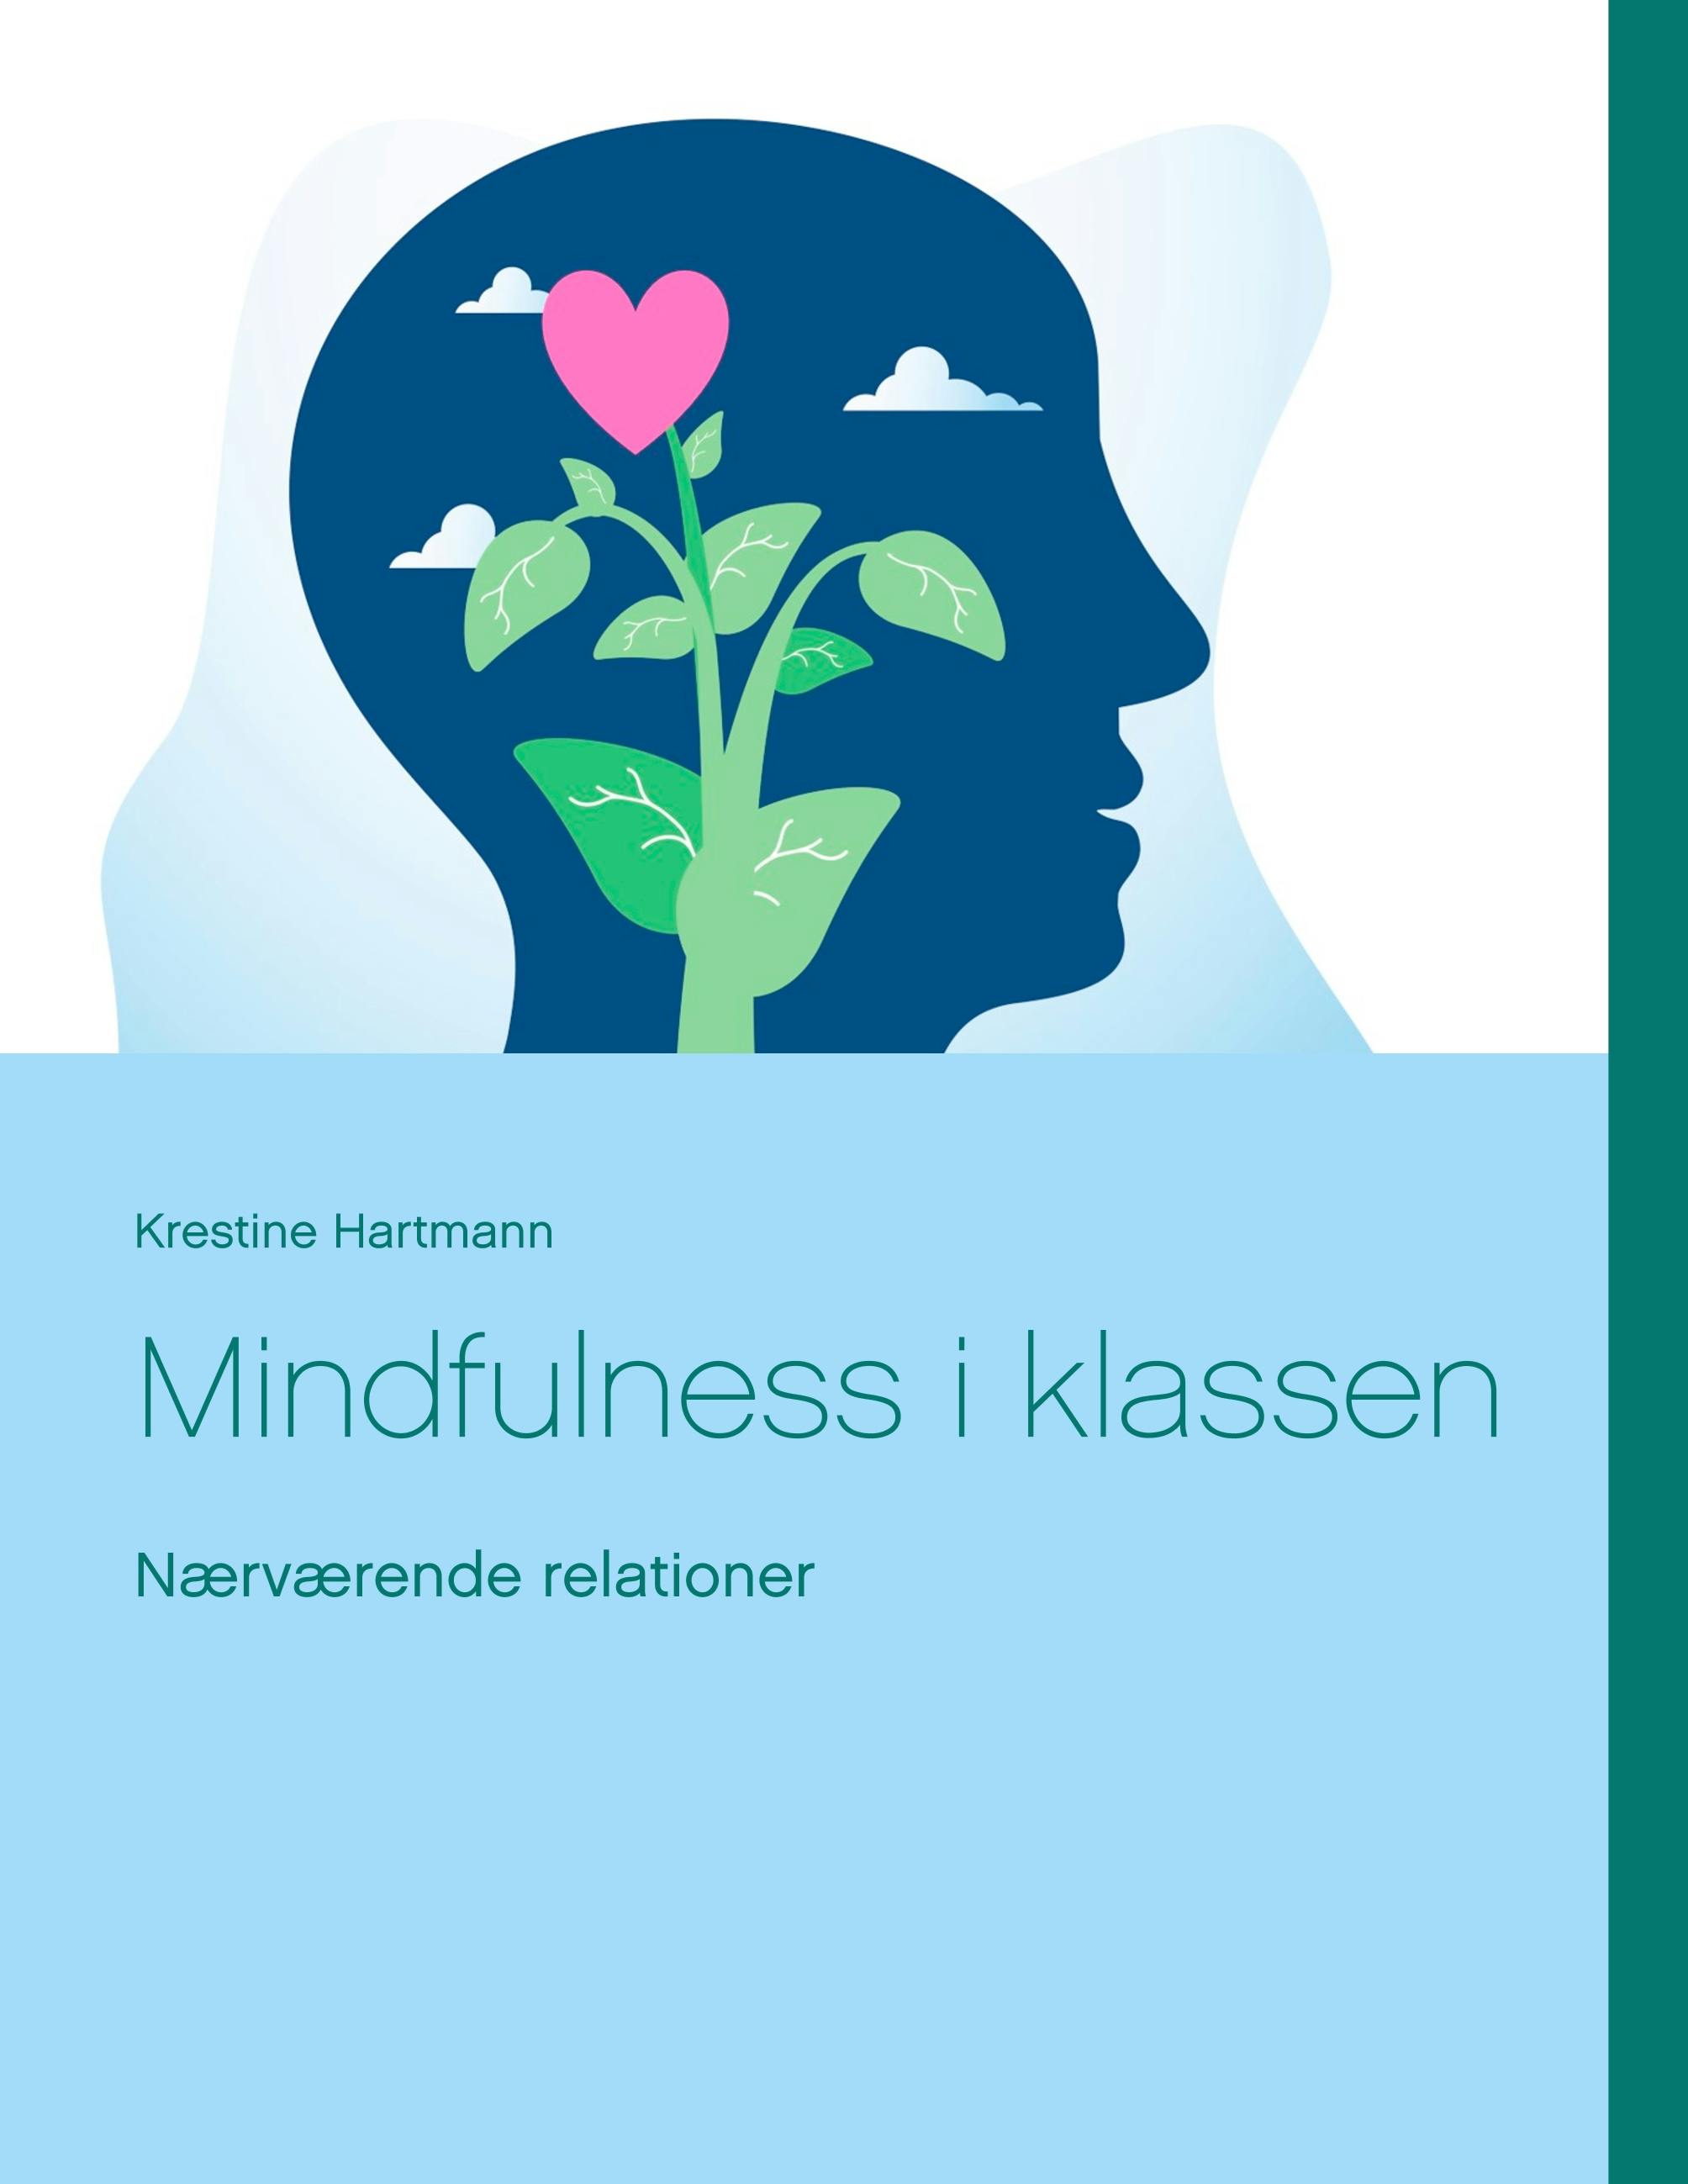 Mindfulness  i klassen - Krestine Hartmann